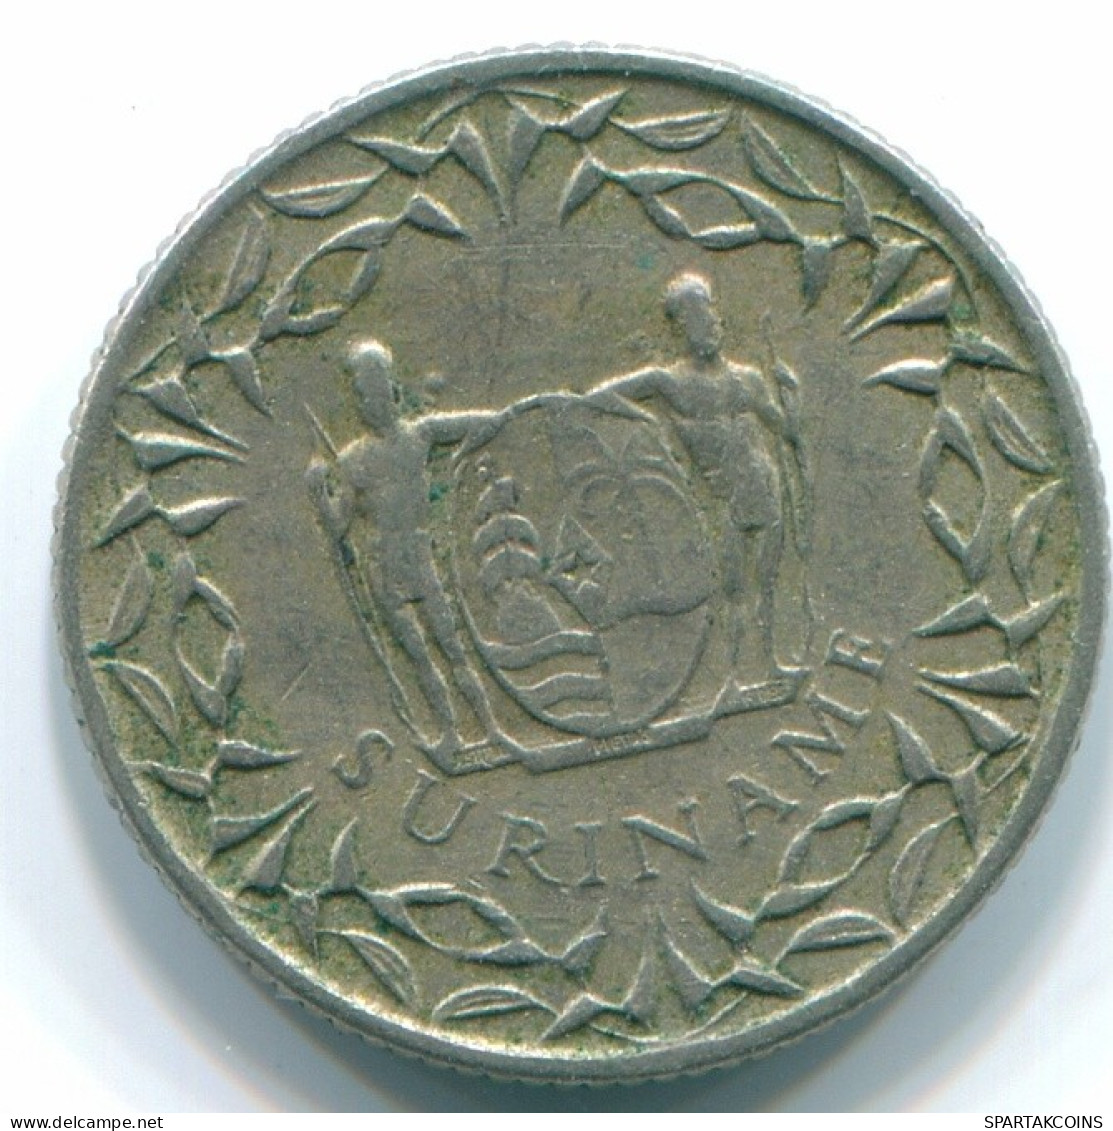 10 CENTS 1962 SURINAME Netherlands Nickel Colonial Coin #S13217.U.A - Suriname 1975 - ...